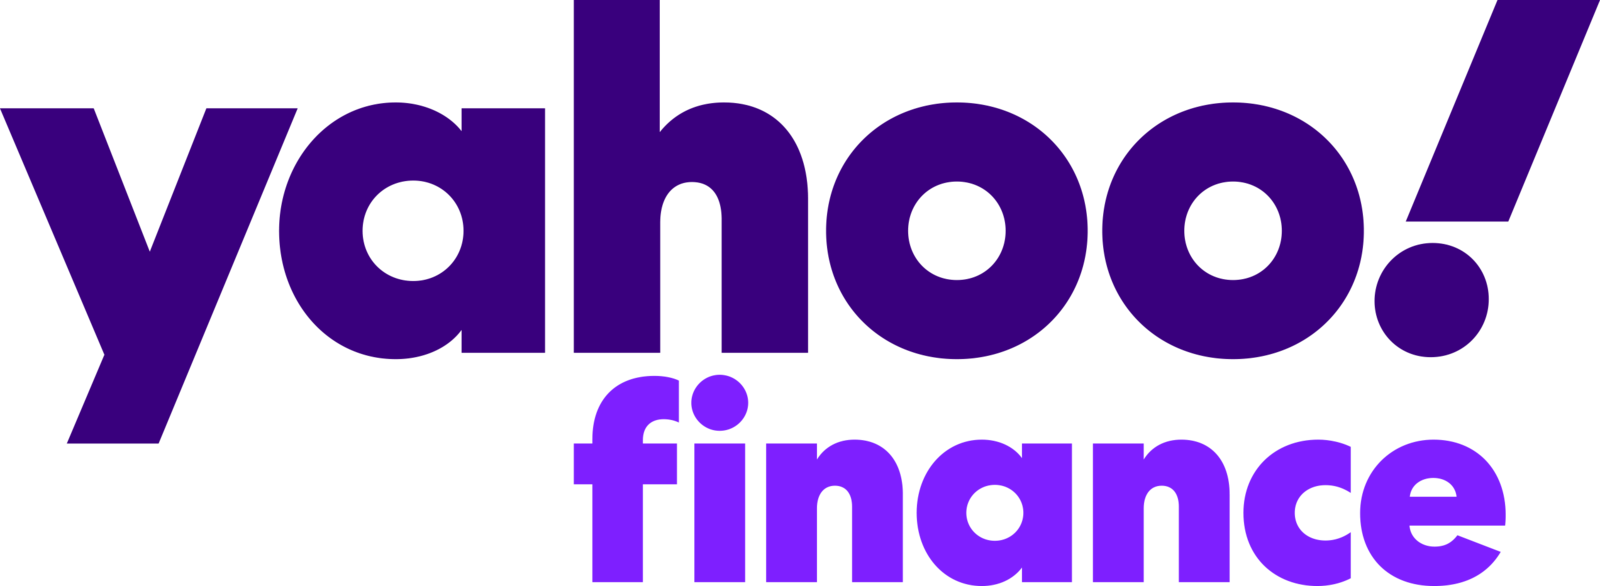 Yahoo Finance features Pacific Debt Relief